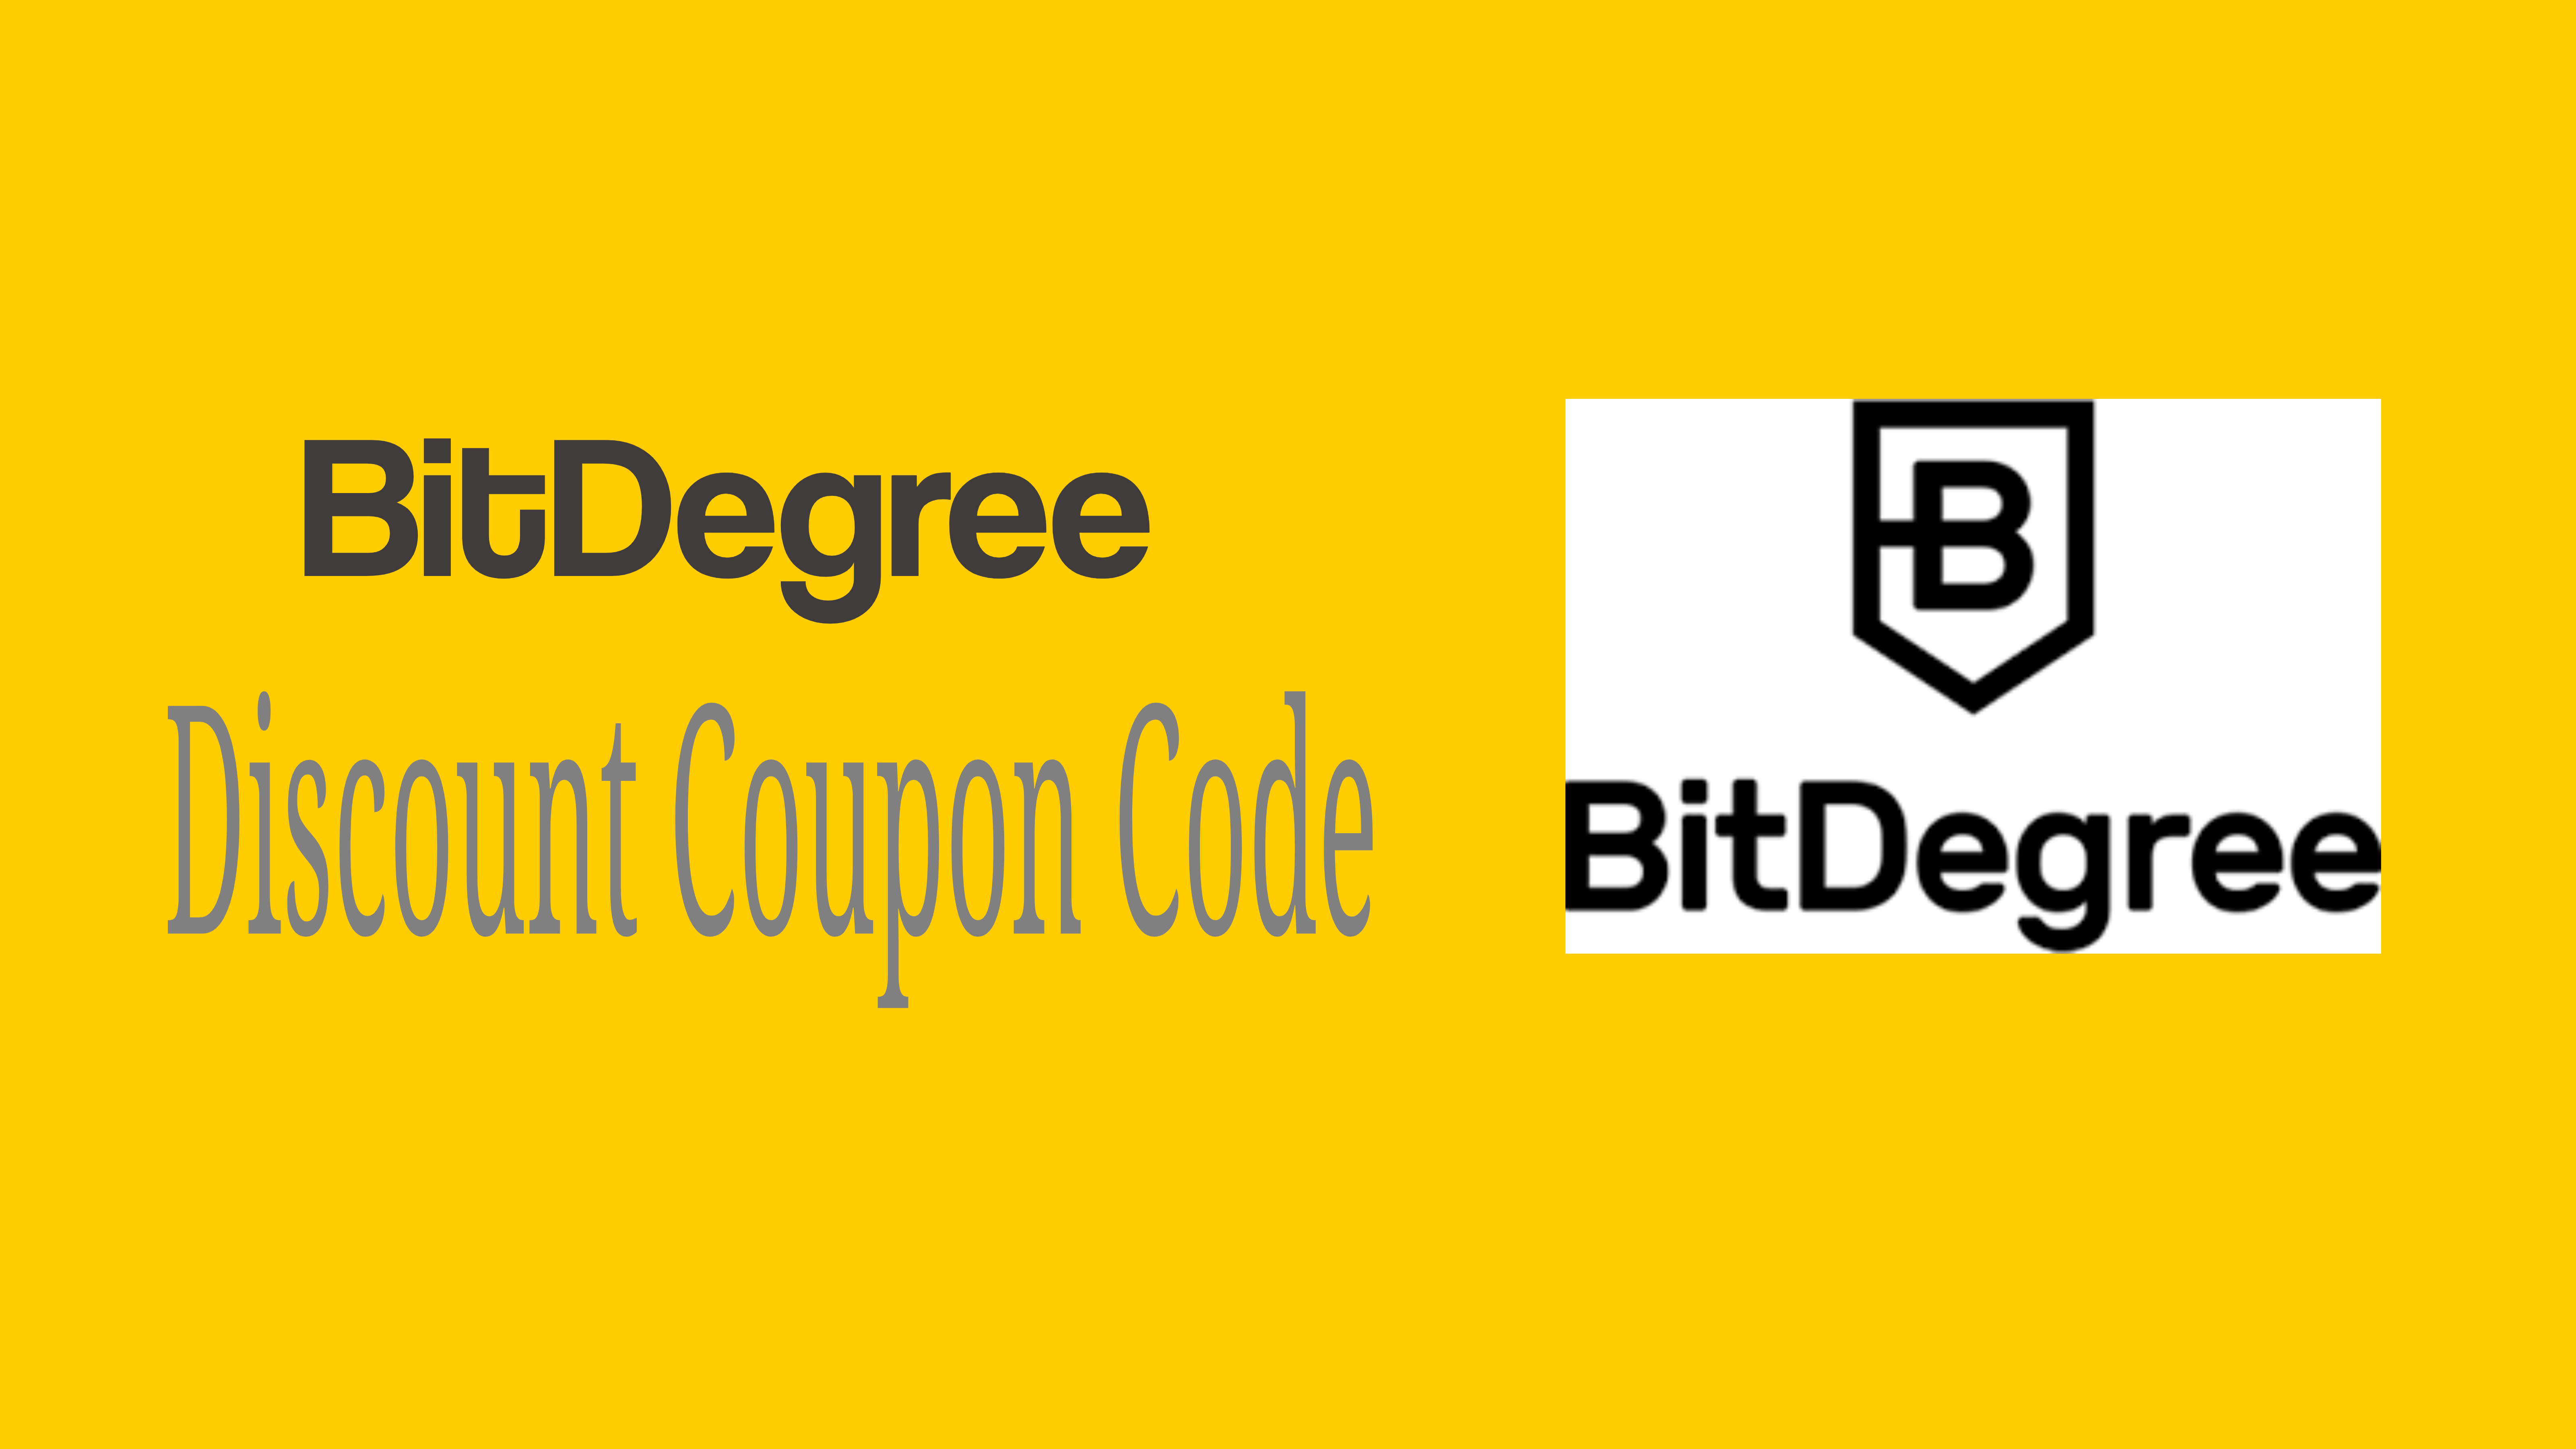 BitDegree Discount Coupon